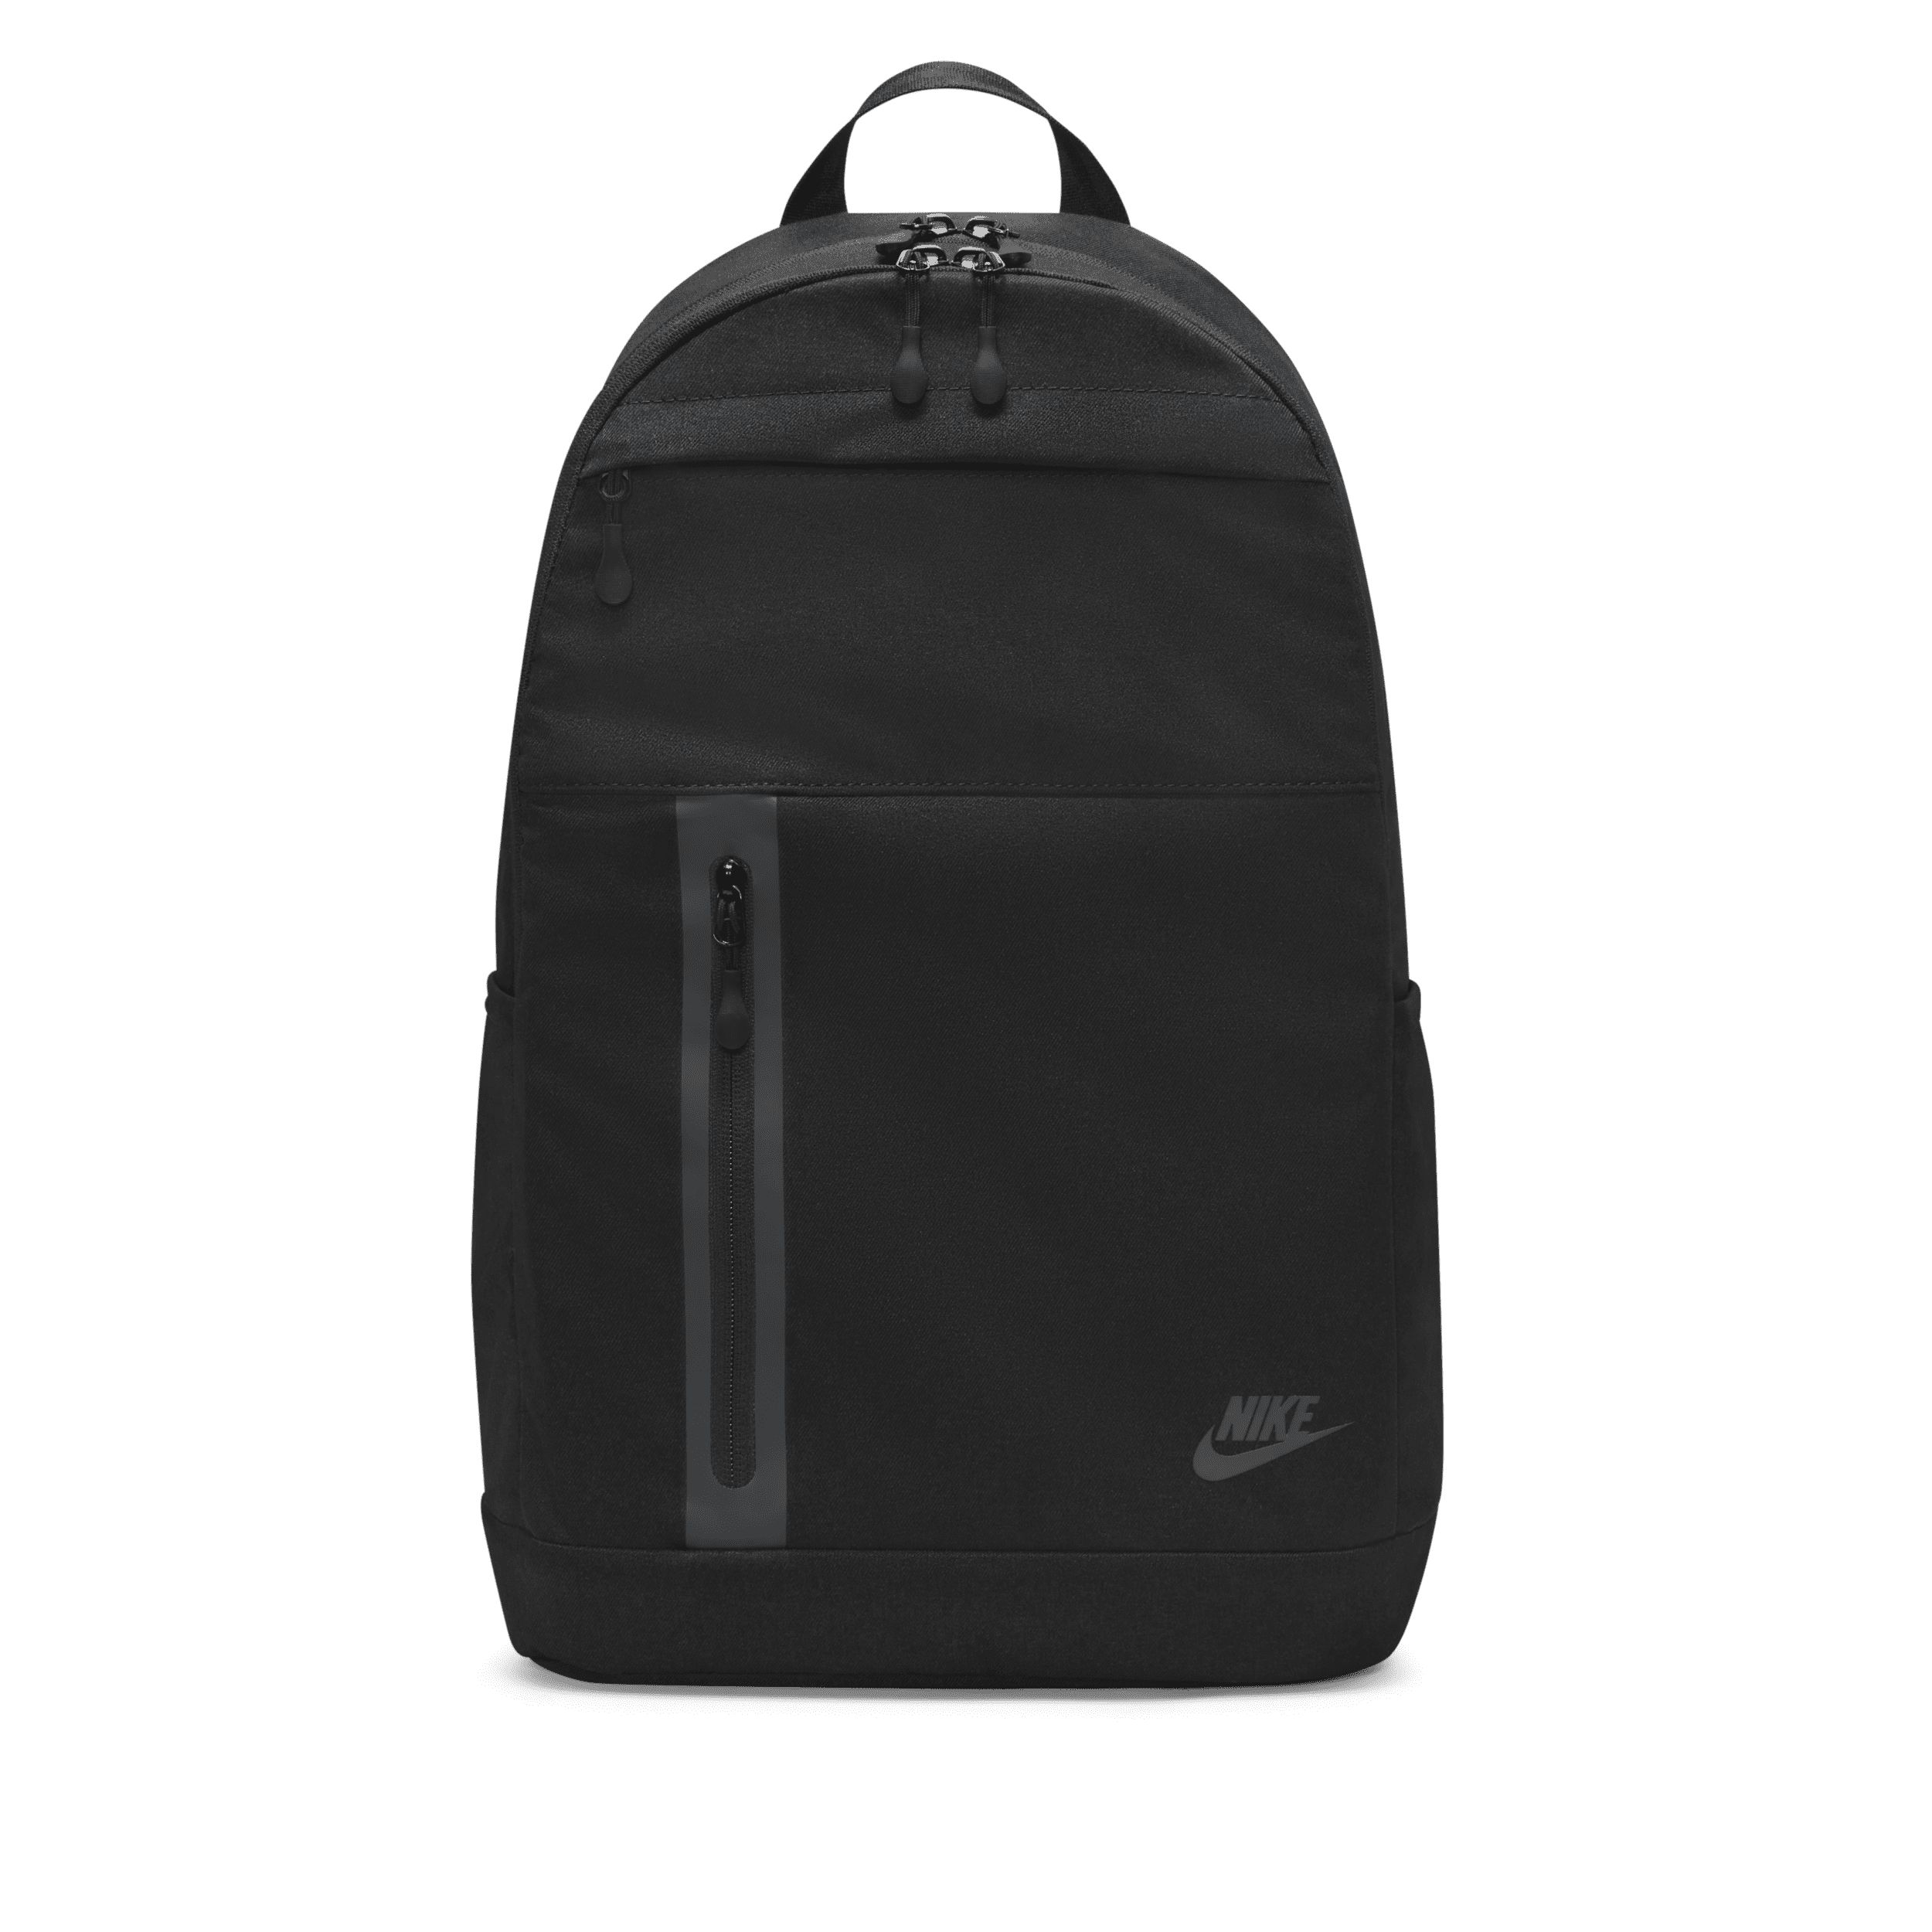 Mochila Nike Elemental Premium Unissex